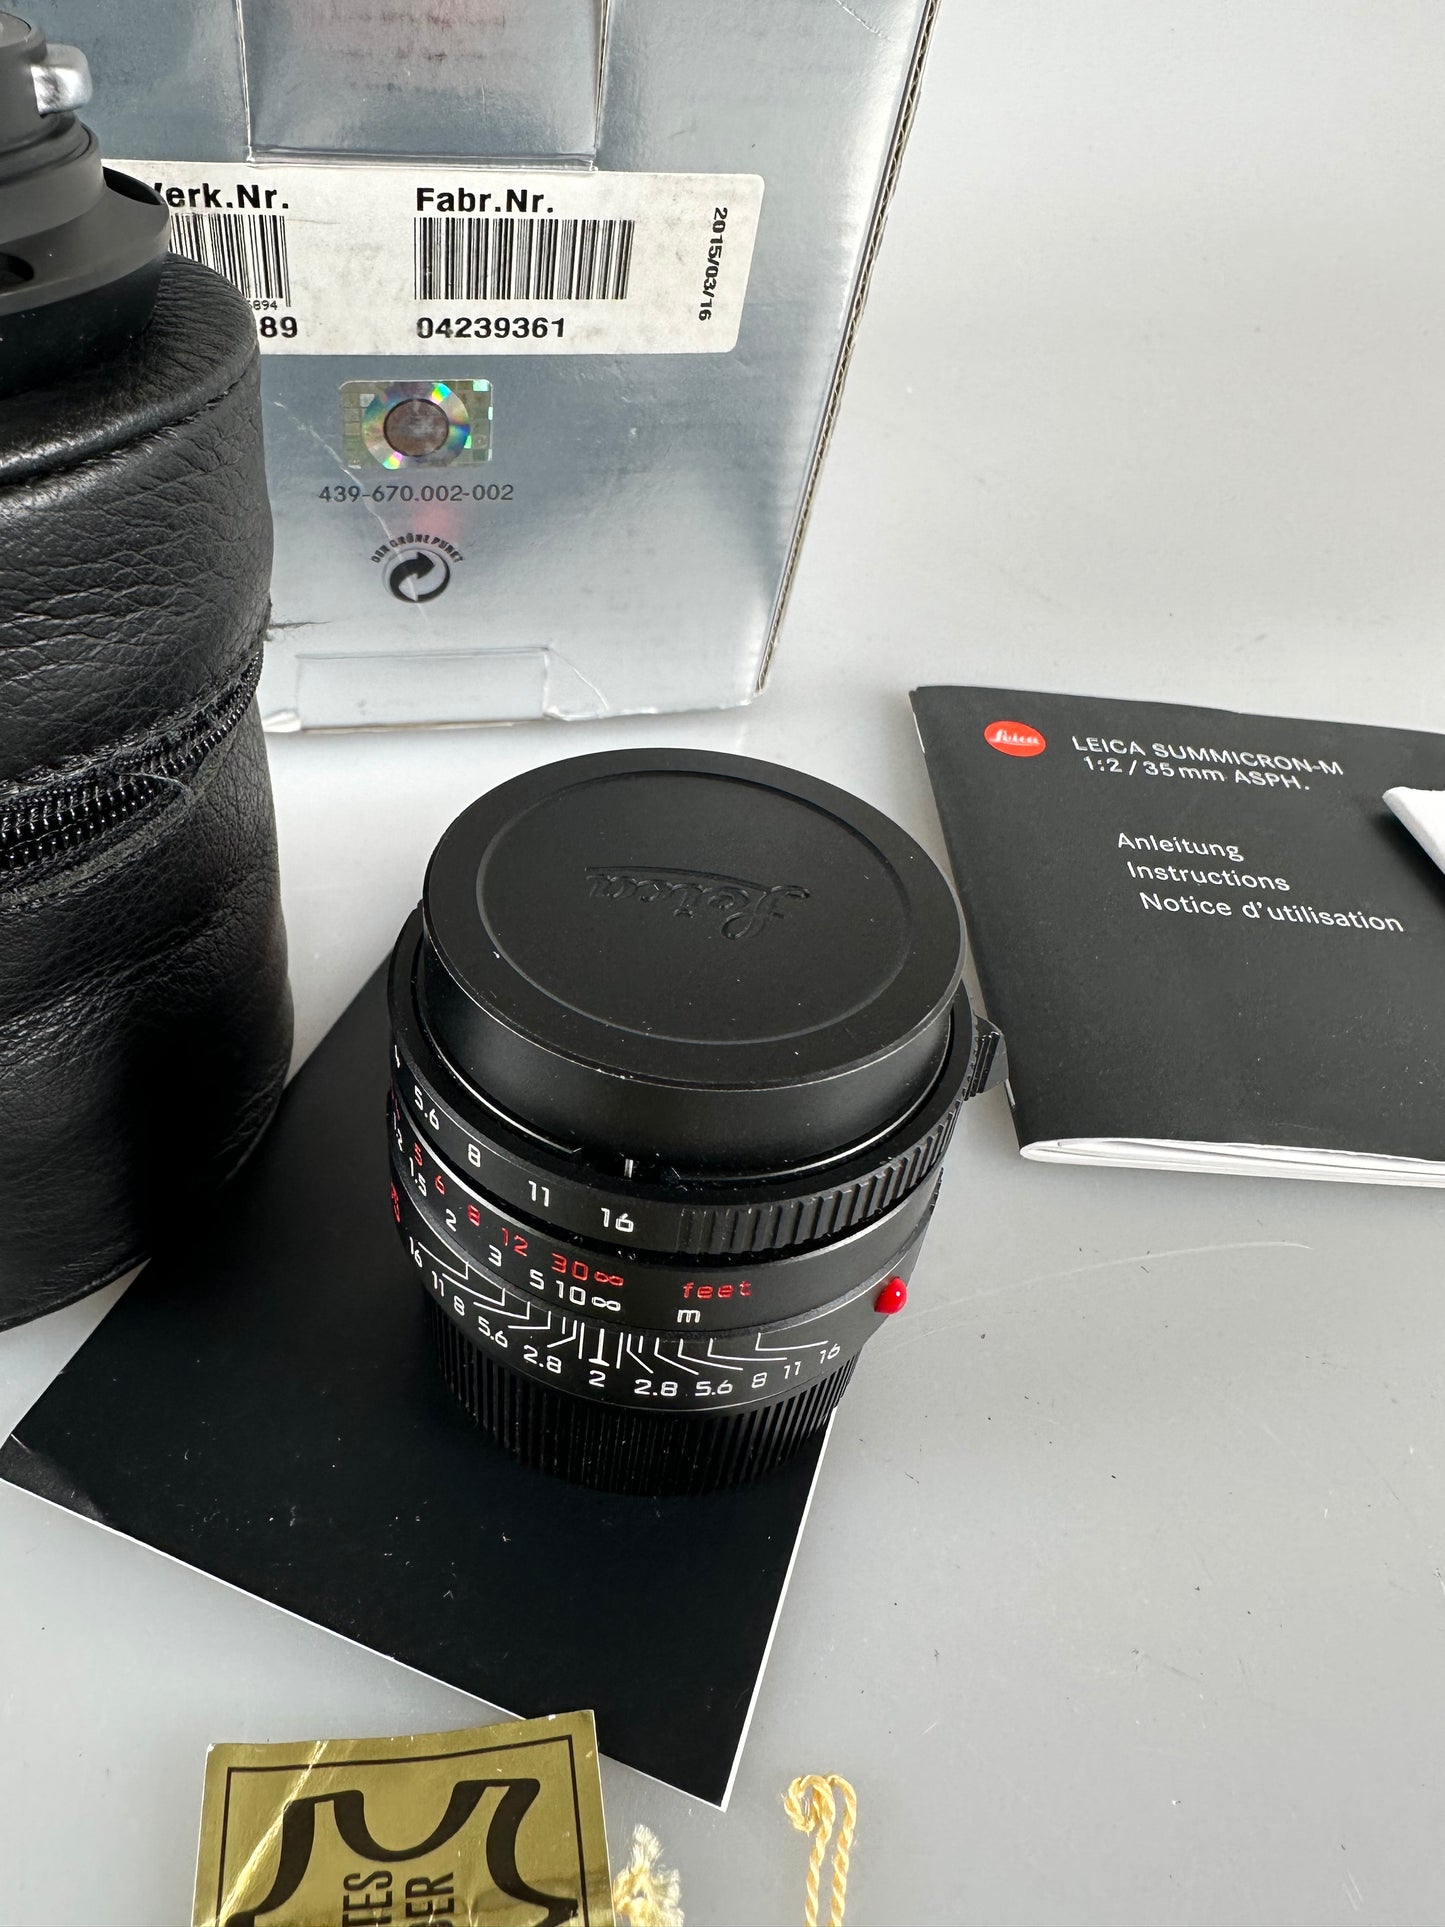 Leica Summicron M ASPH 35mm F2 Limited edition Black chrome brass lens RARE